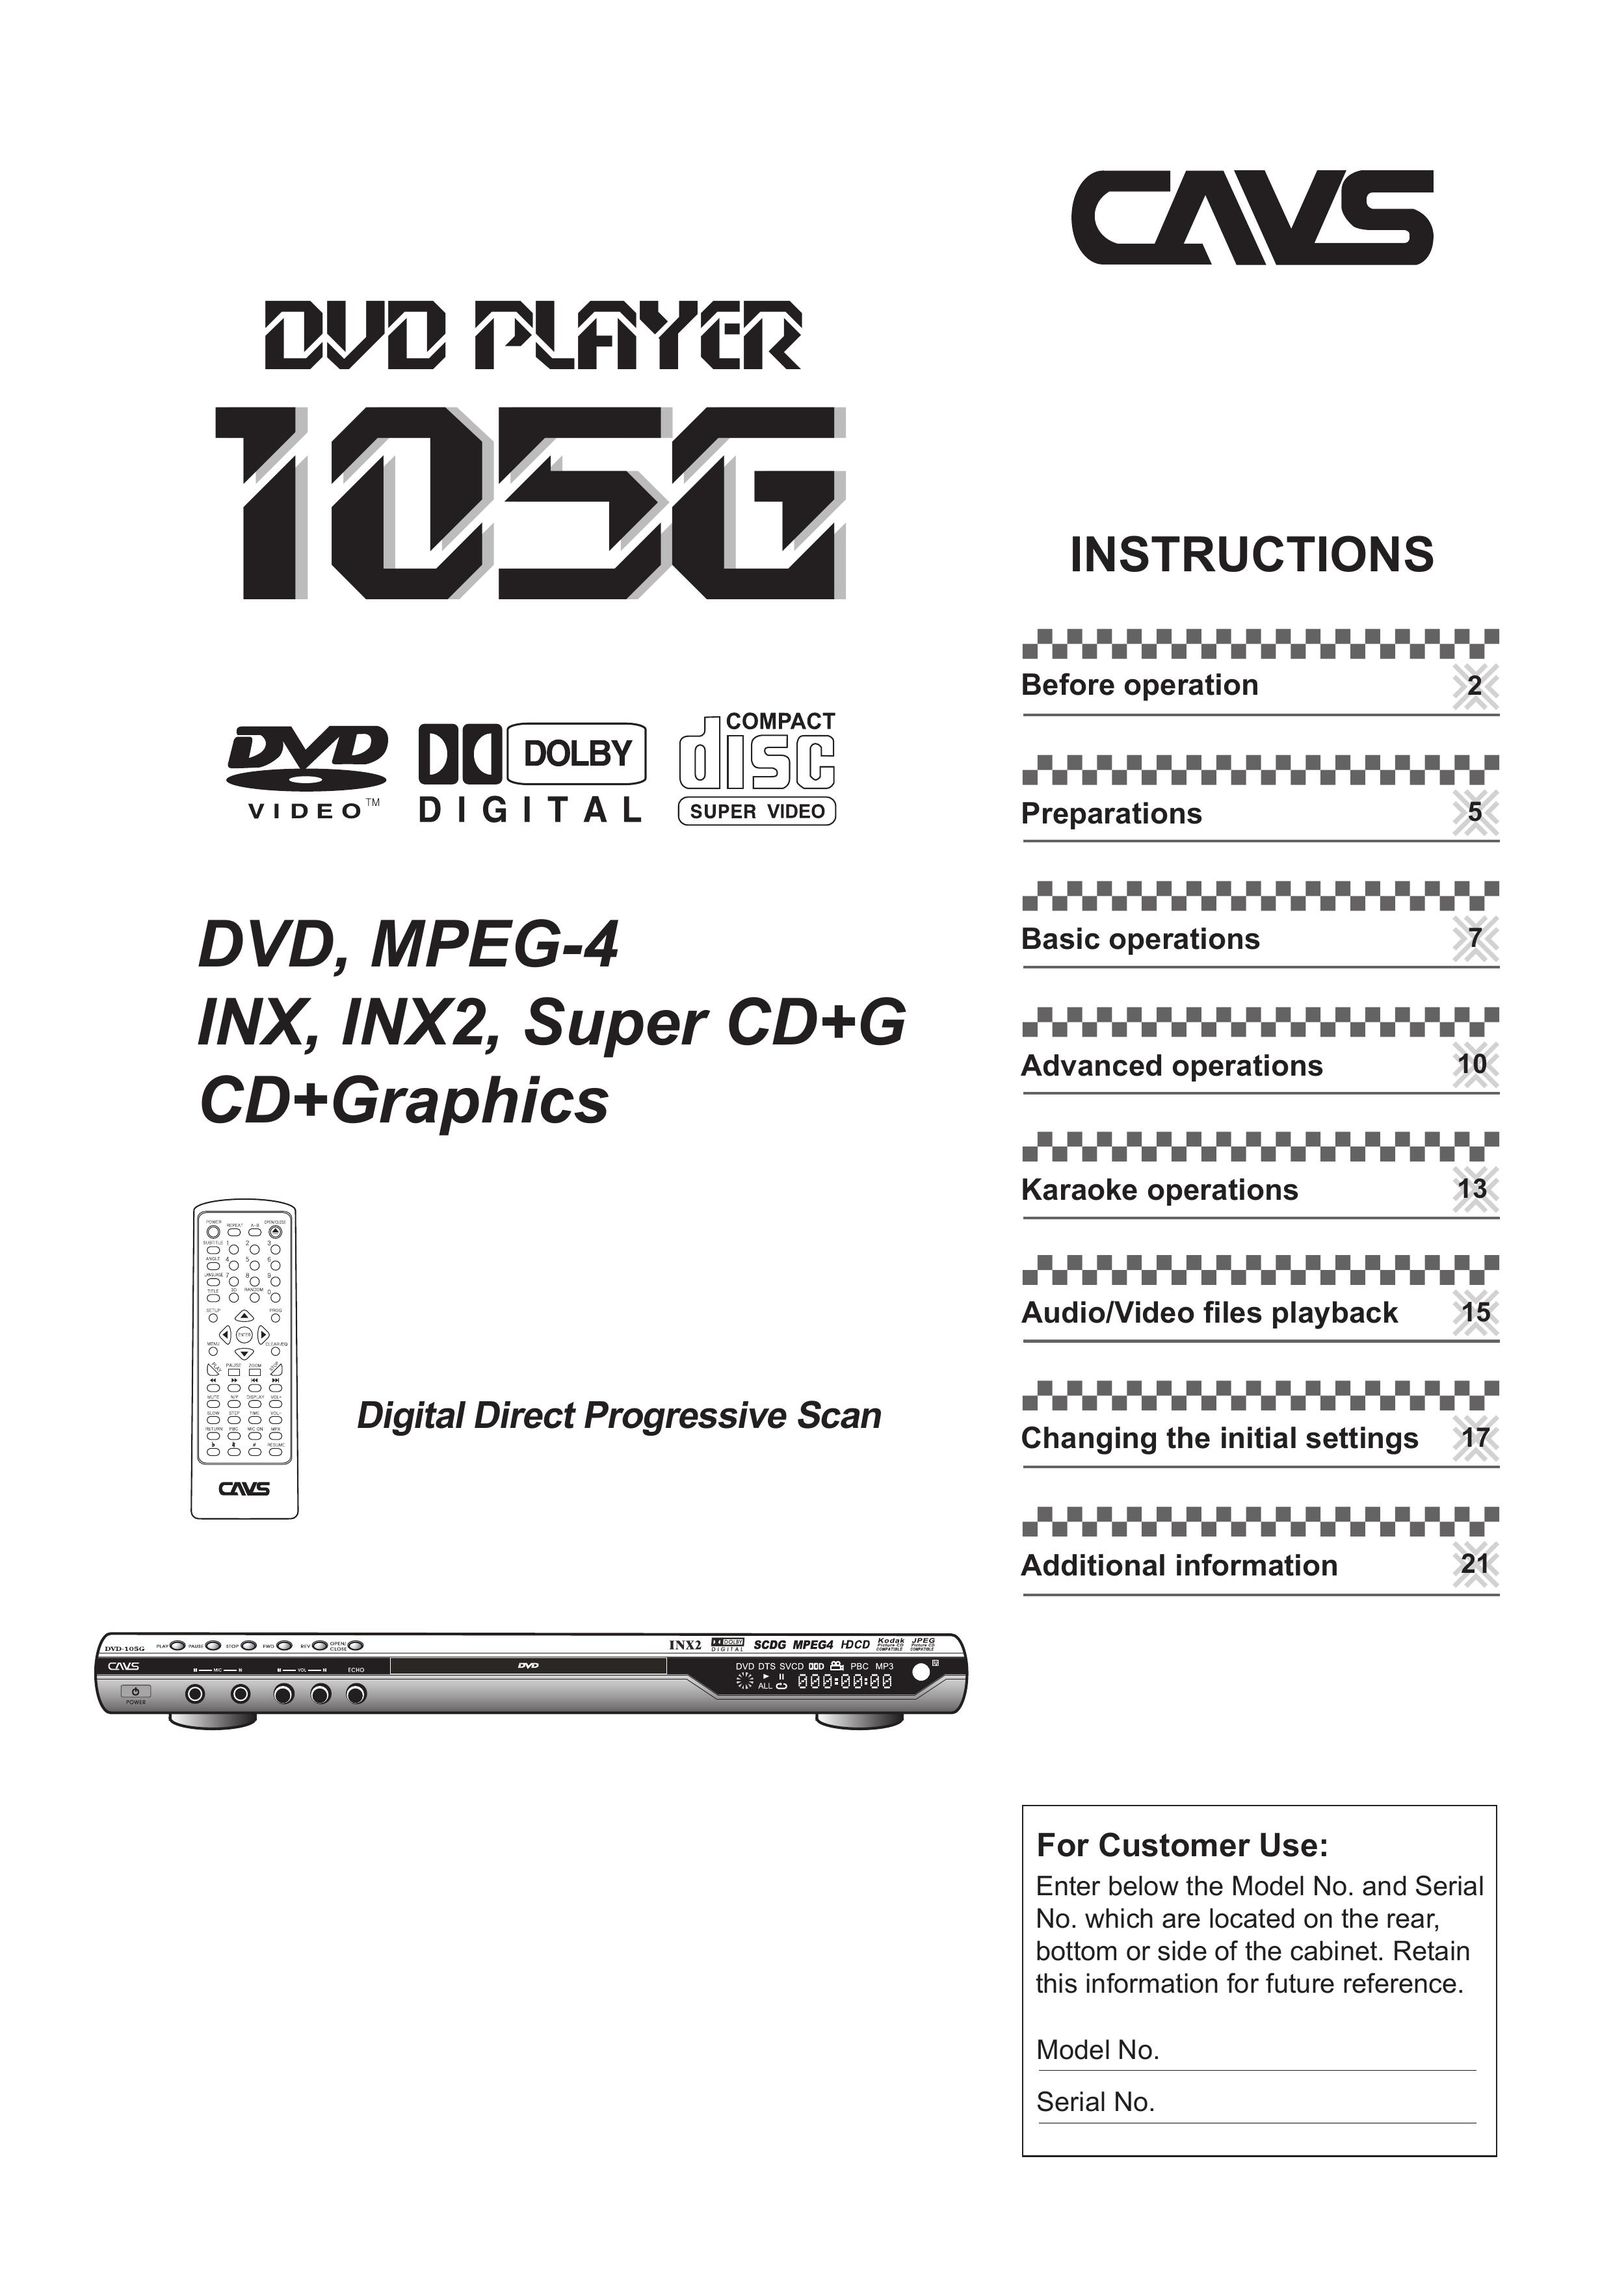 CAVS 105G DVD Player User Manual